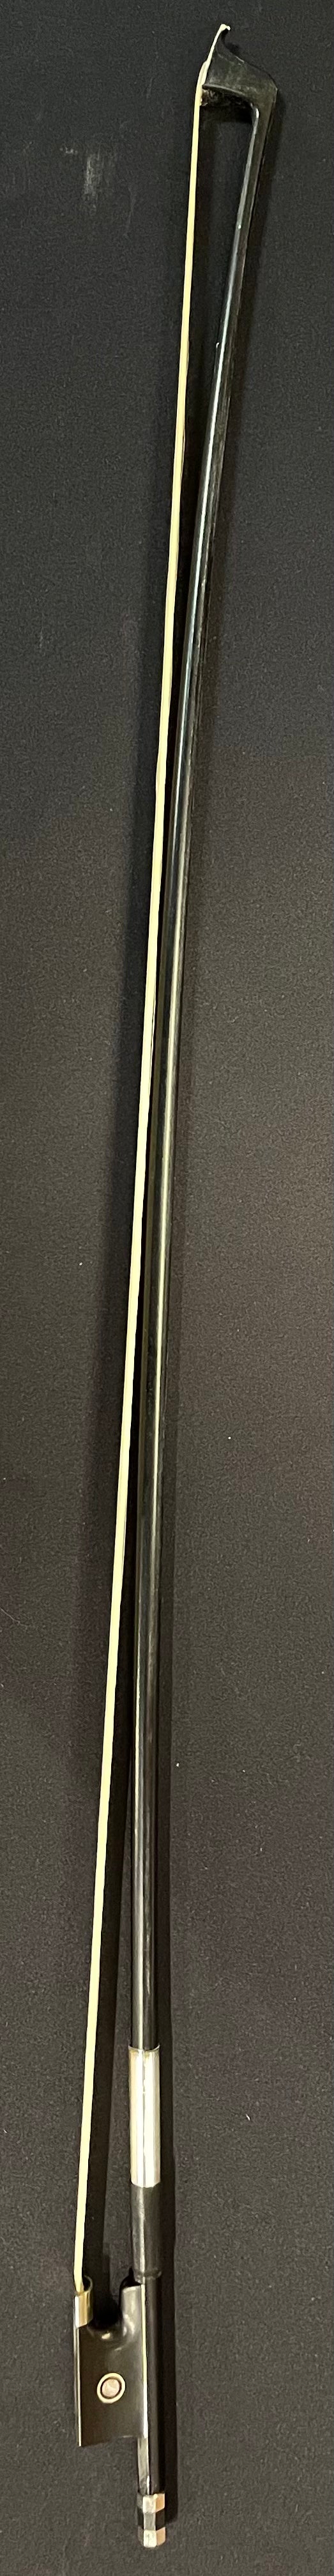 4/4 Violin Bow - Reale I Fiber Glass Model